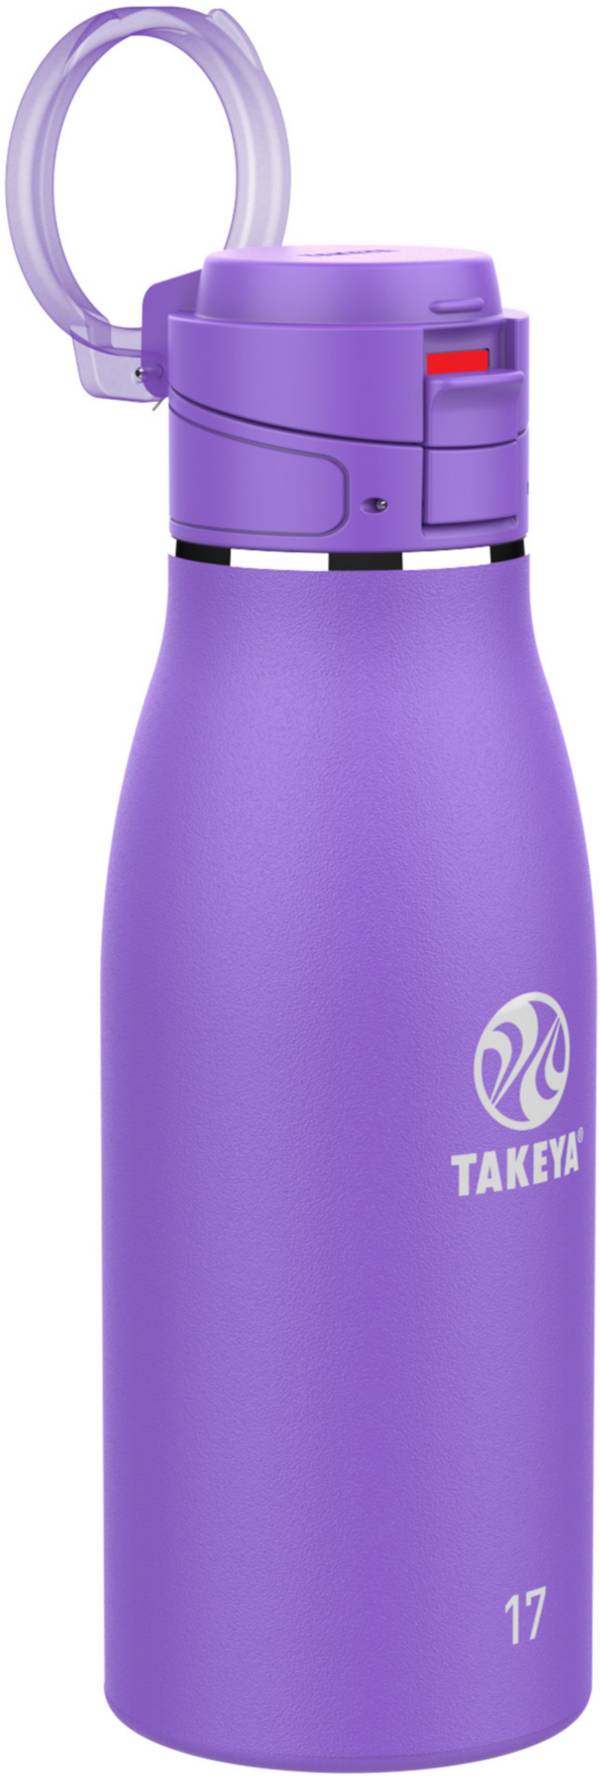 Takeya Traveler Insulated Leak-Proof Mug with FlipLock Lid product image